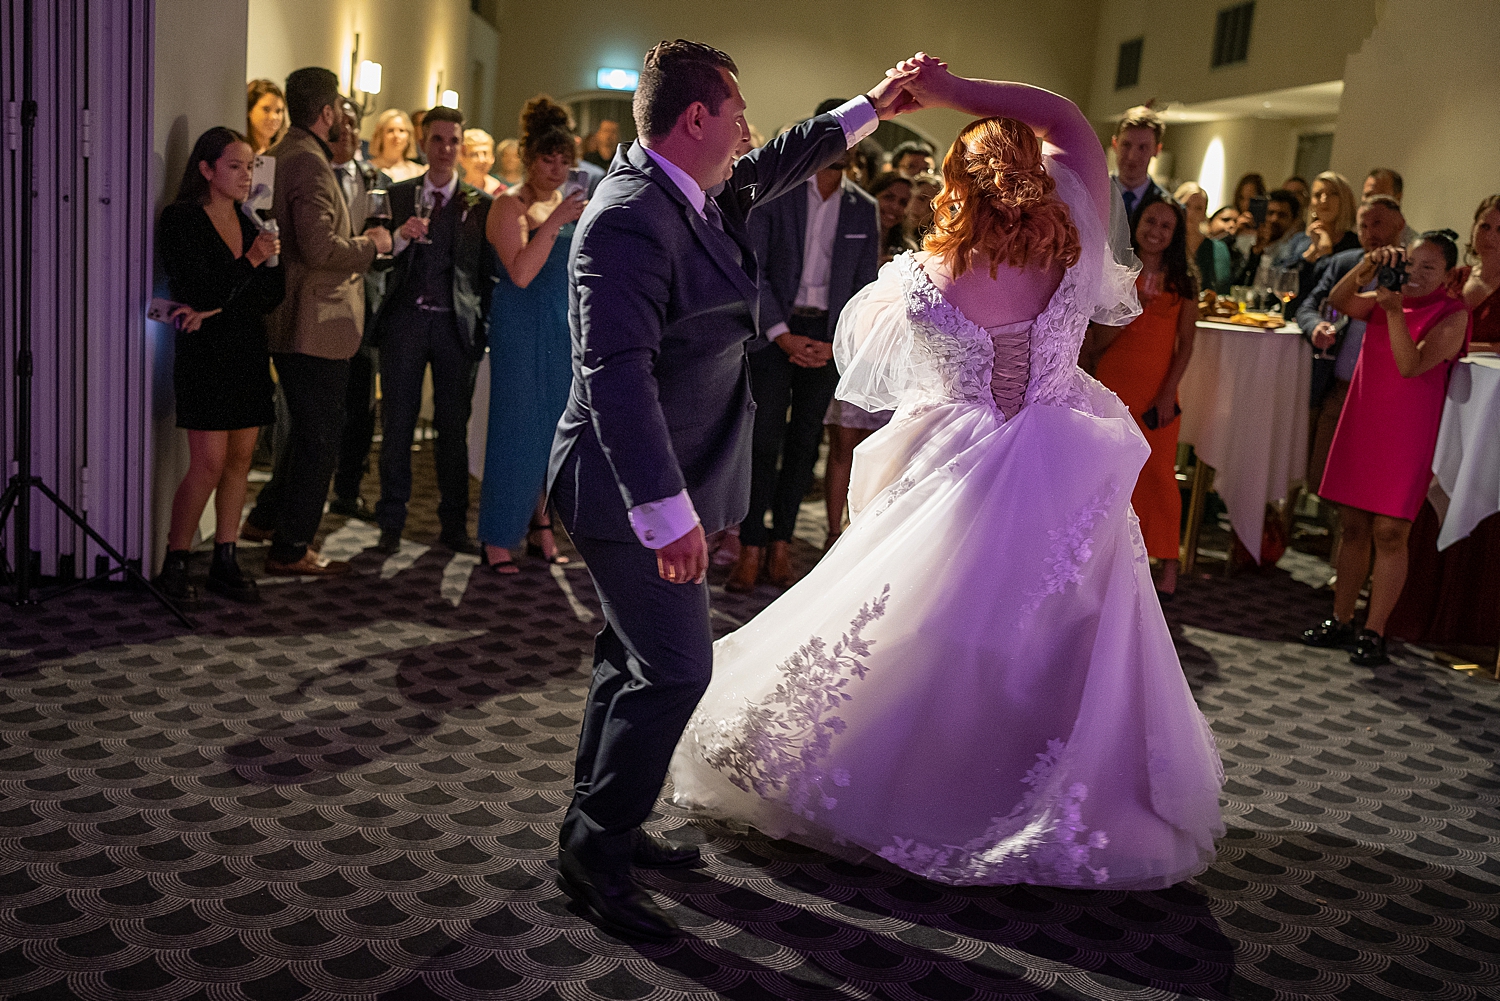 Wedding Reception, Lions Hotel Melbourne street Adelaide,DreamTeamImaging, Wedding first dance